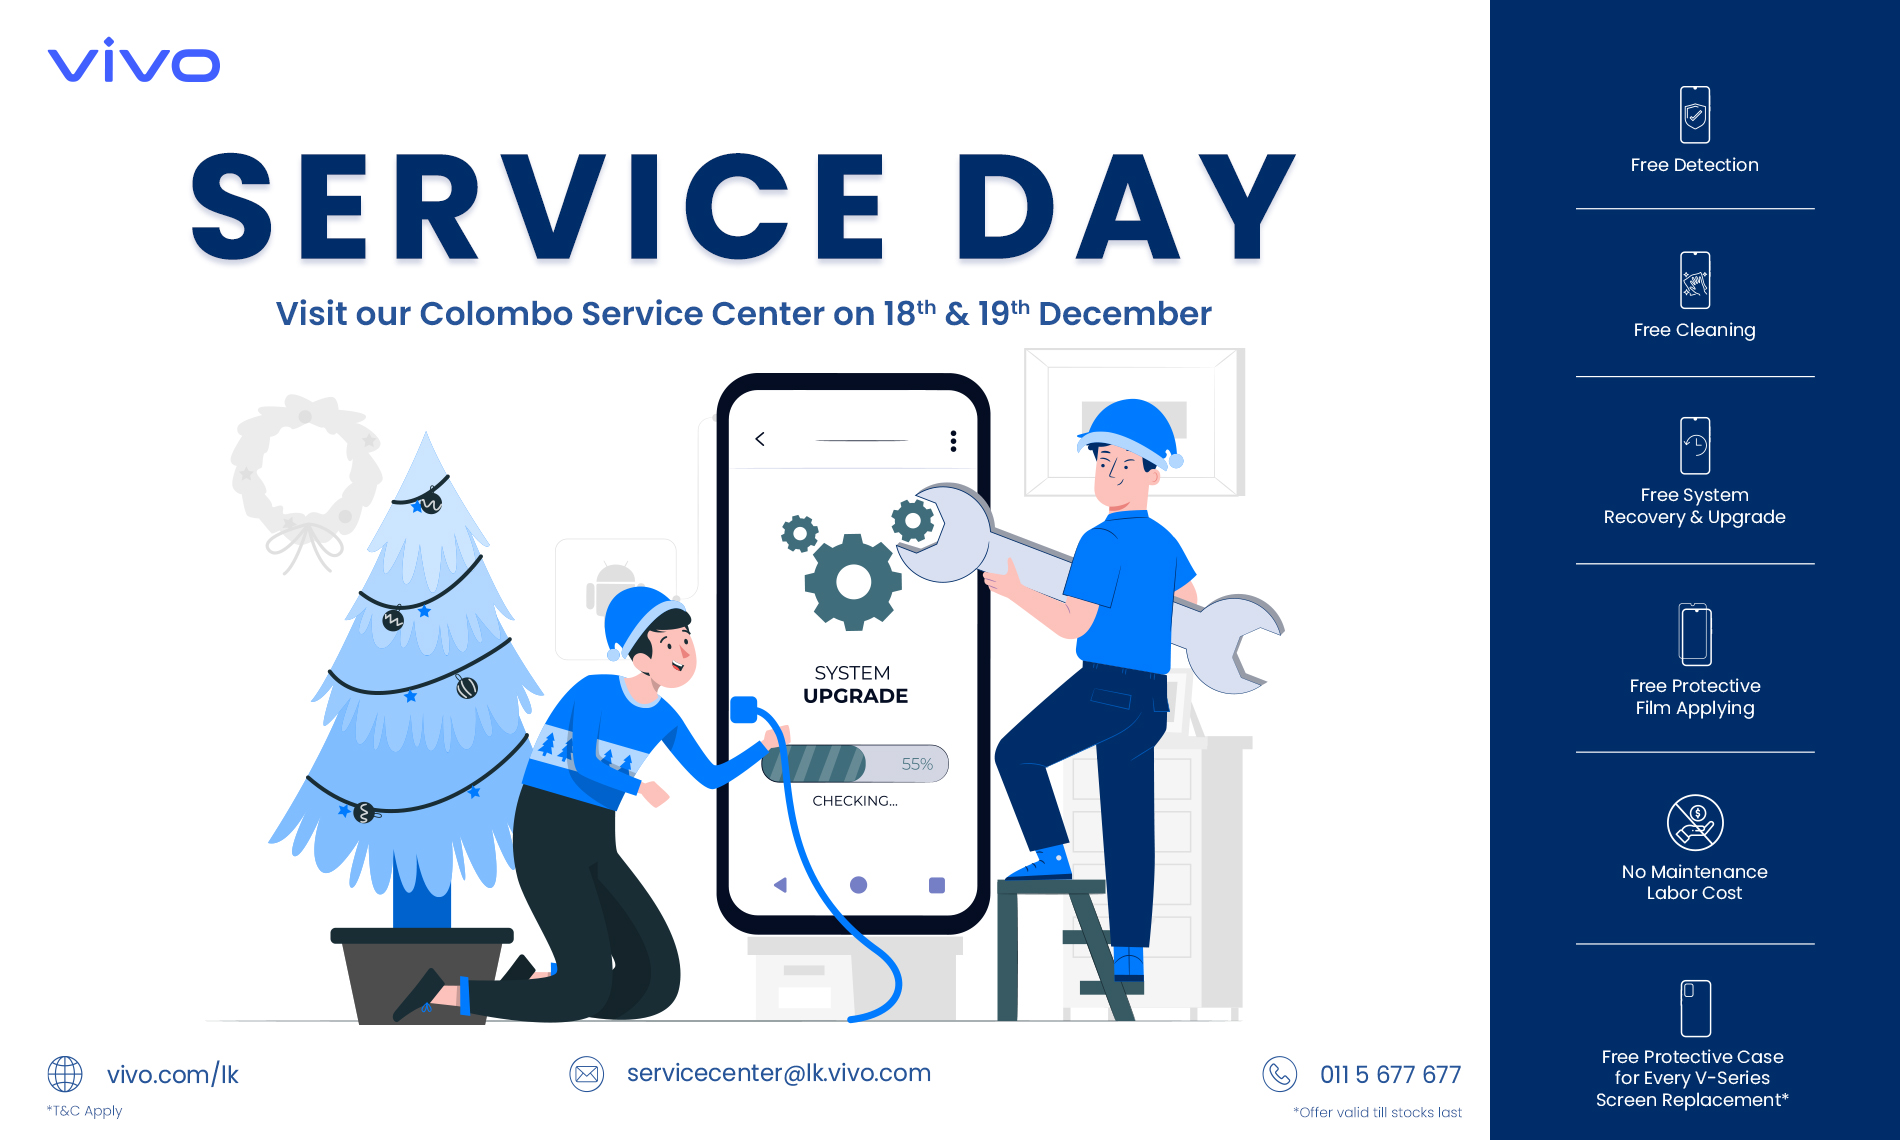 vivo Service Day Benefits in December